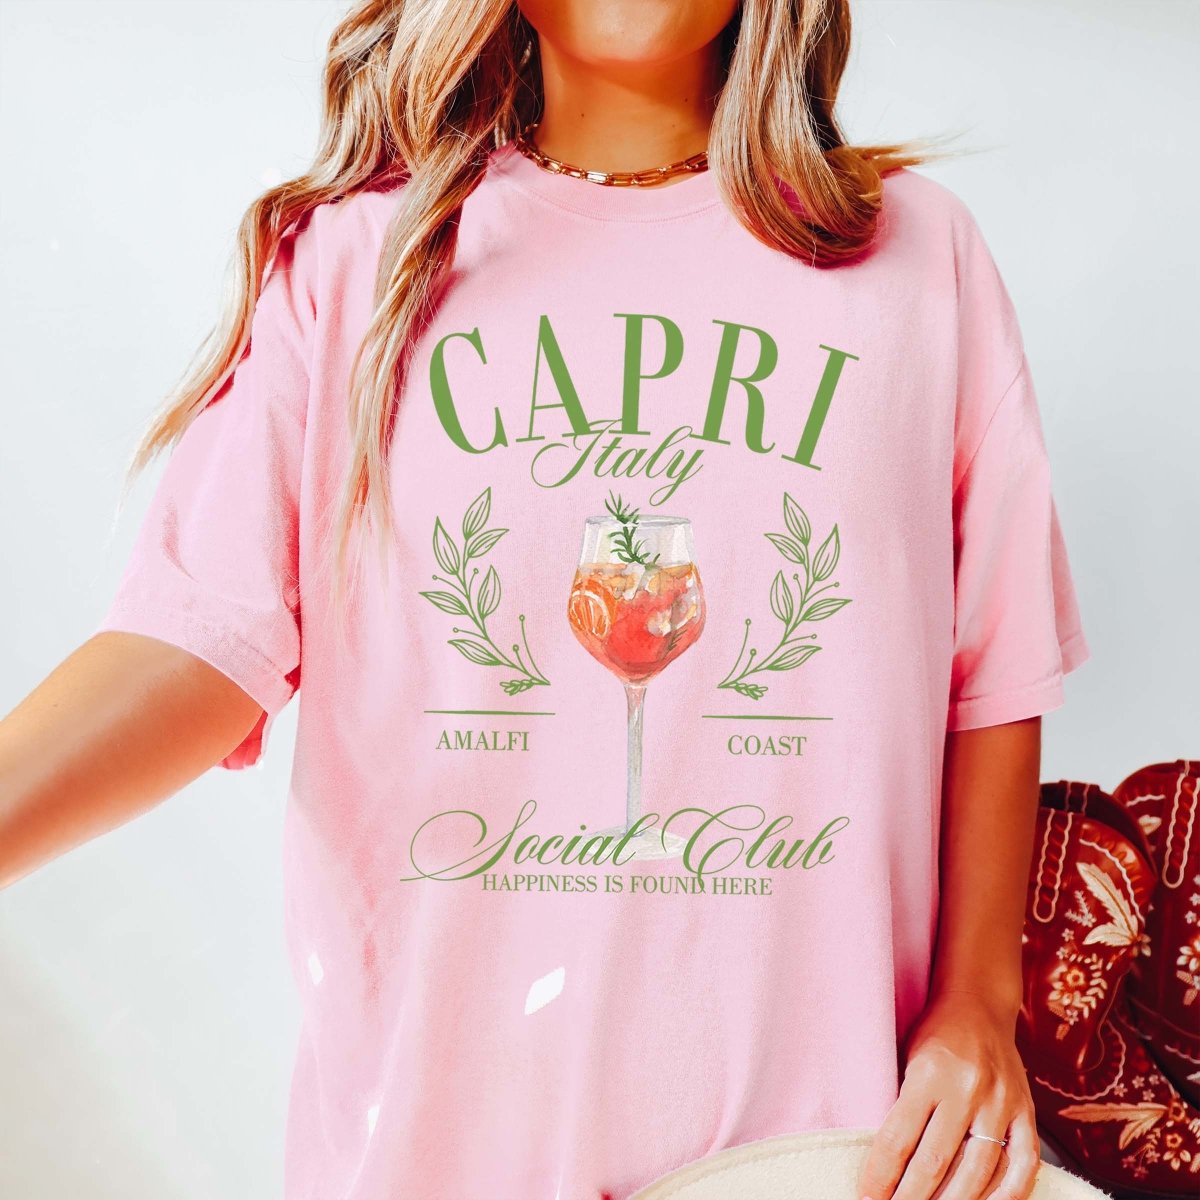 Capri Italy Social Club Tee - Limeberry Designs